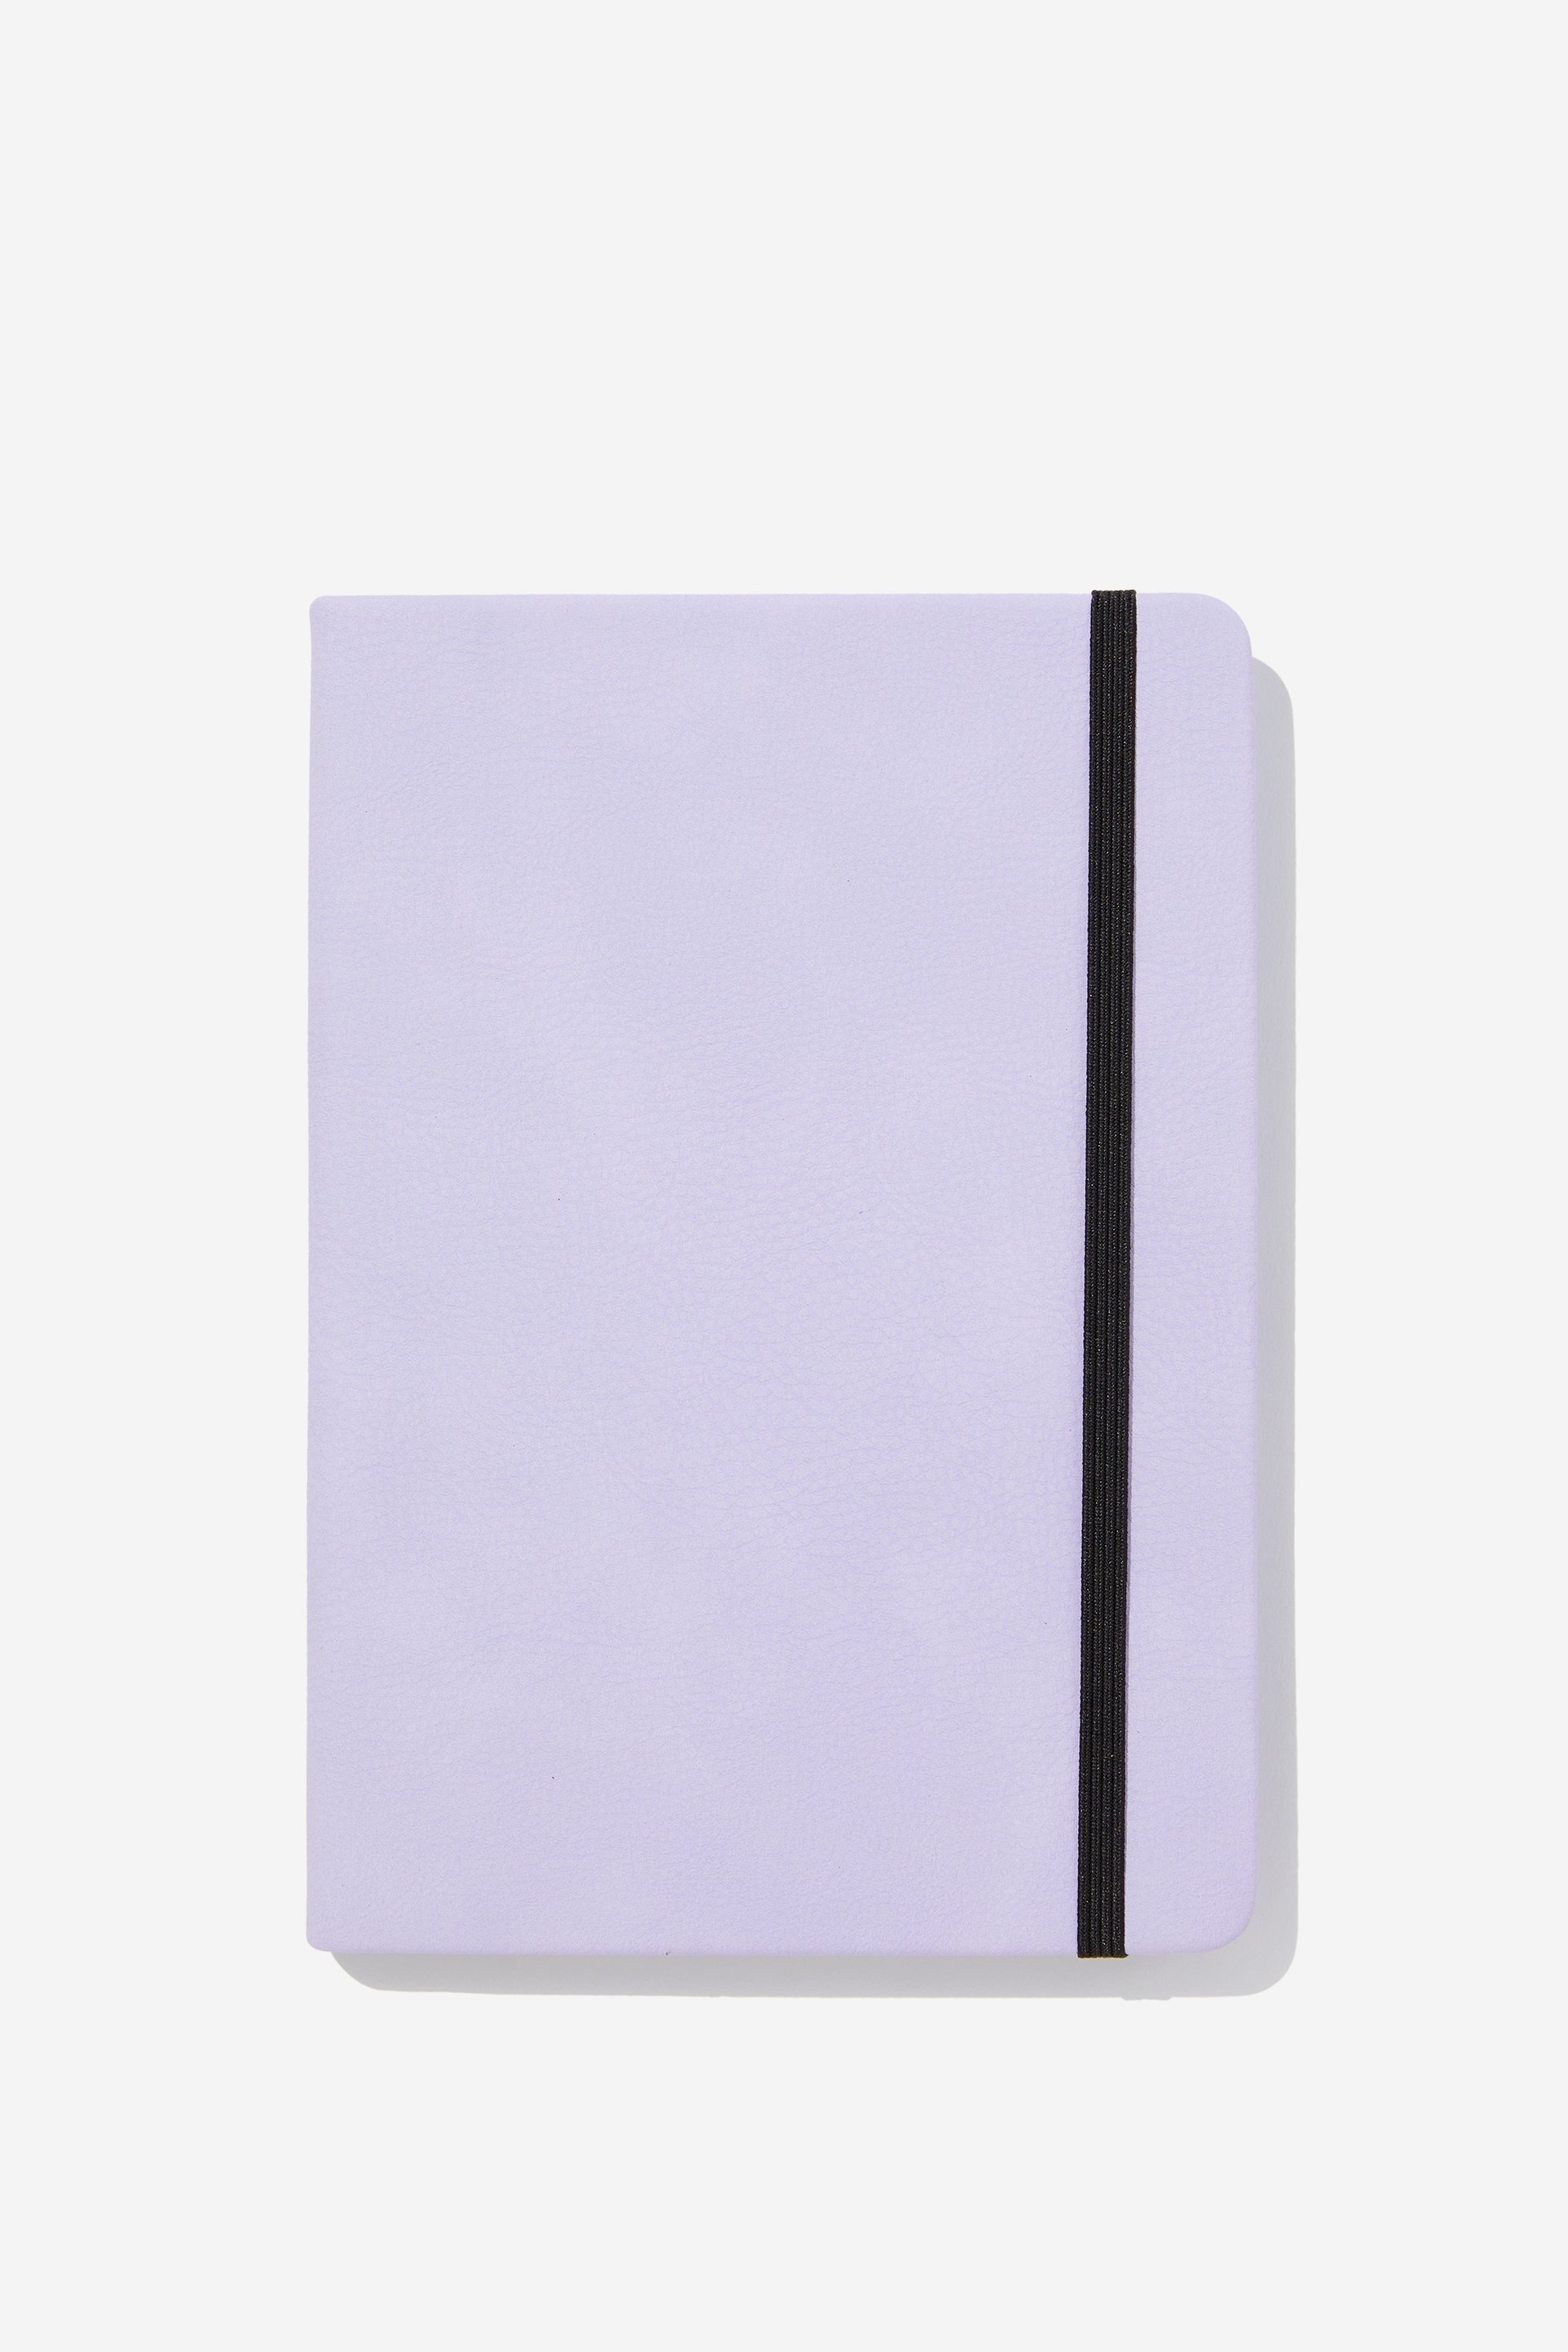 Typo - A5 Buffalo Journal - Soft lilac